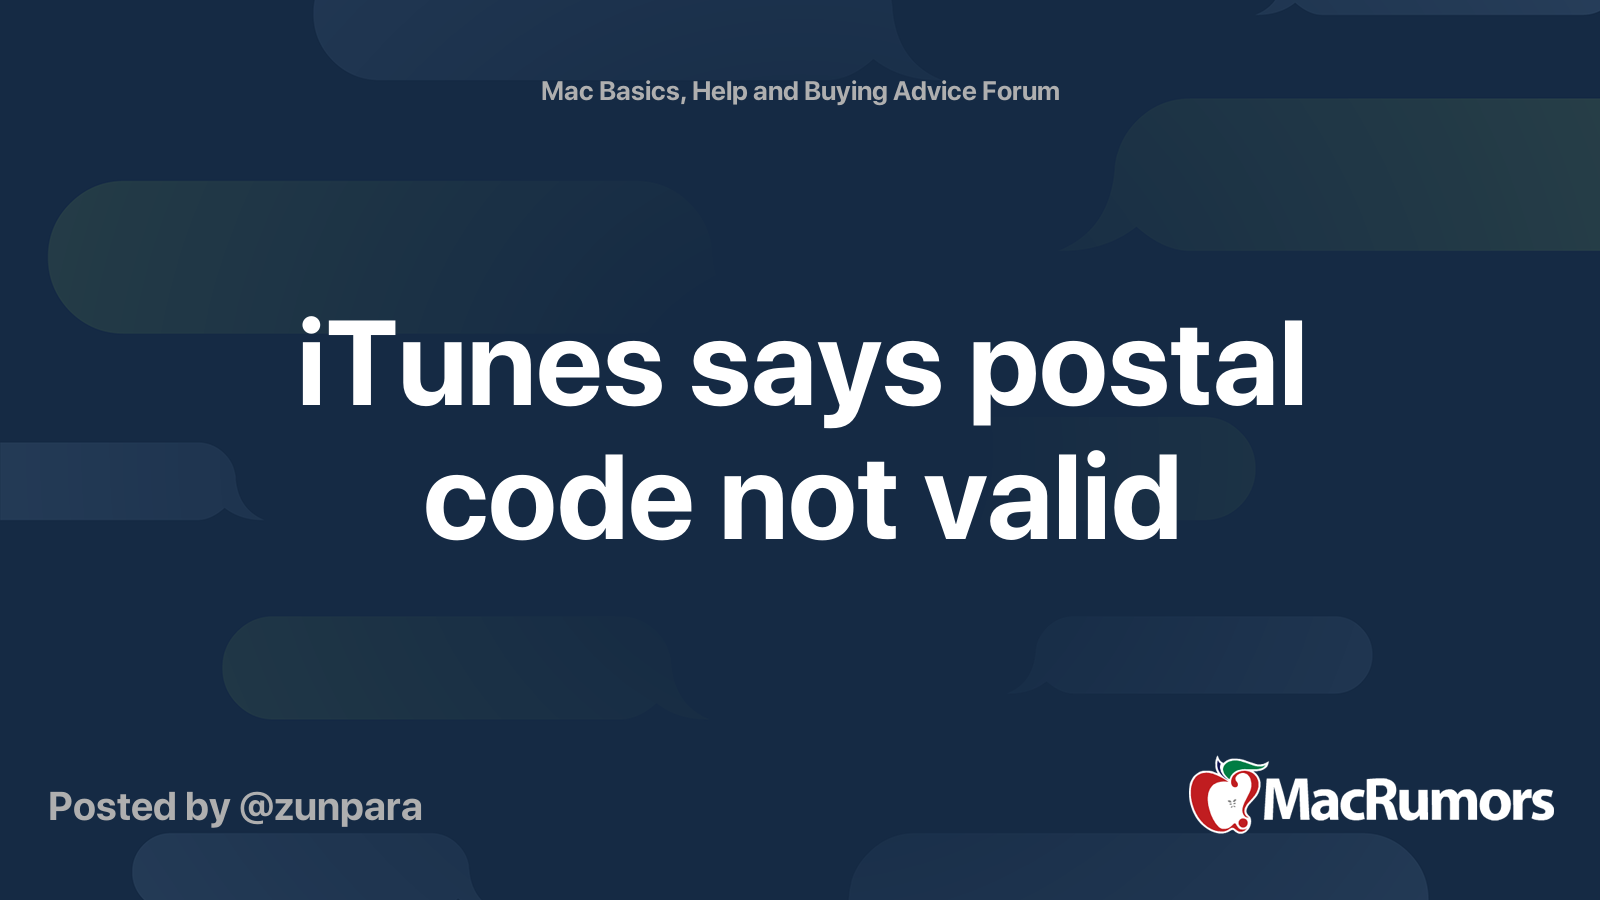 itunes-says-postal-code-not-valid-macrumors-forums